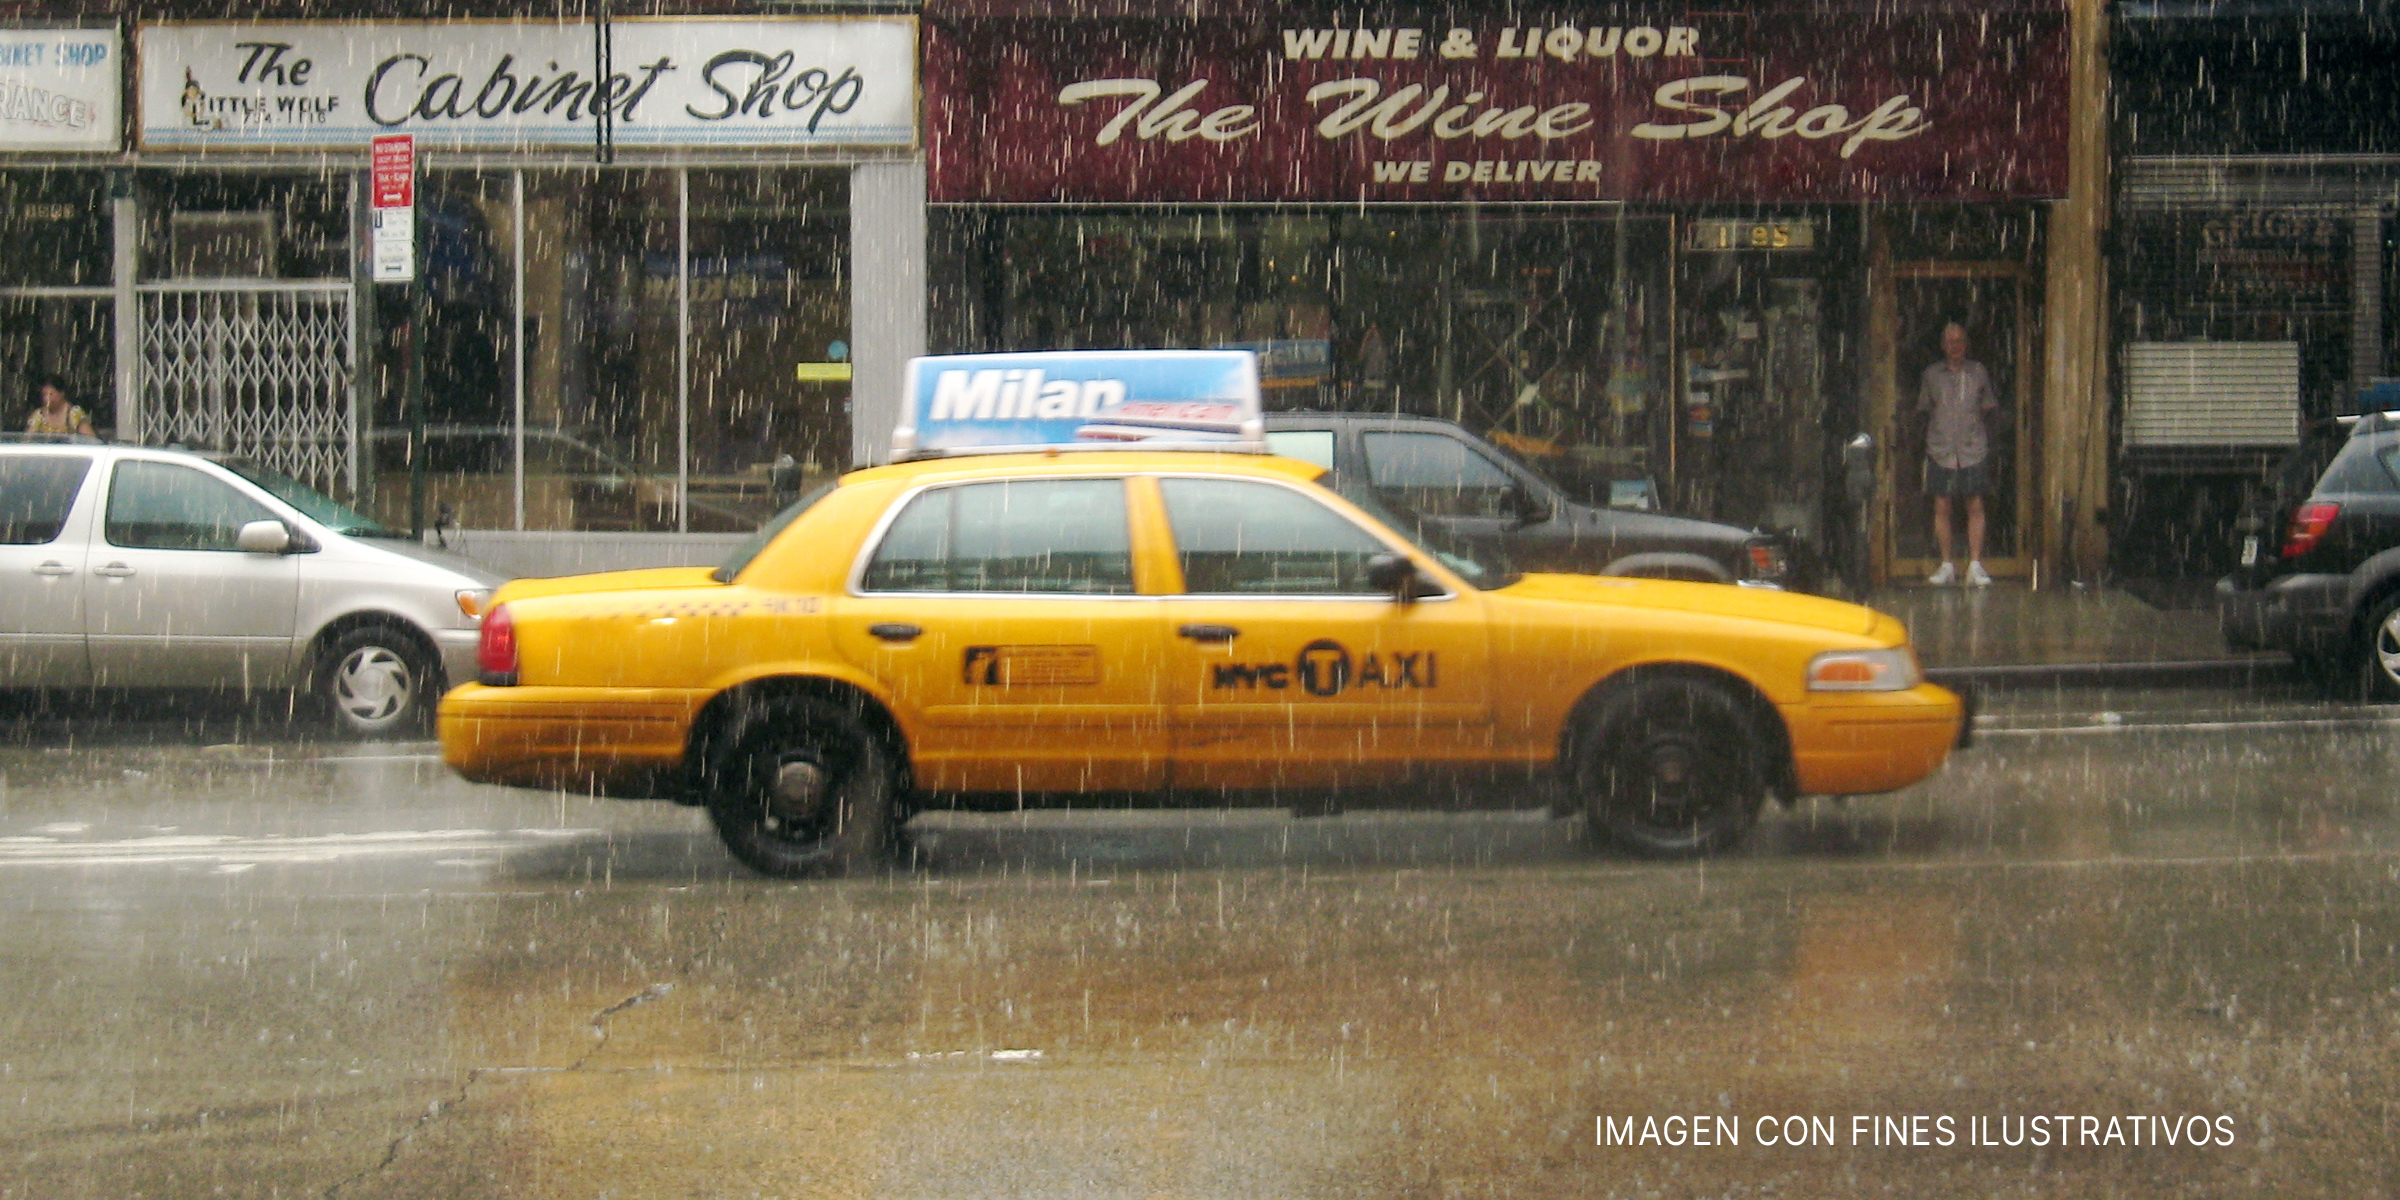 Taxi en la calle bajo la lluvia | Foto: Flickr.com/wka (CC BY-SA 2.0)